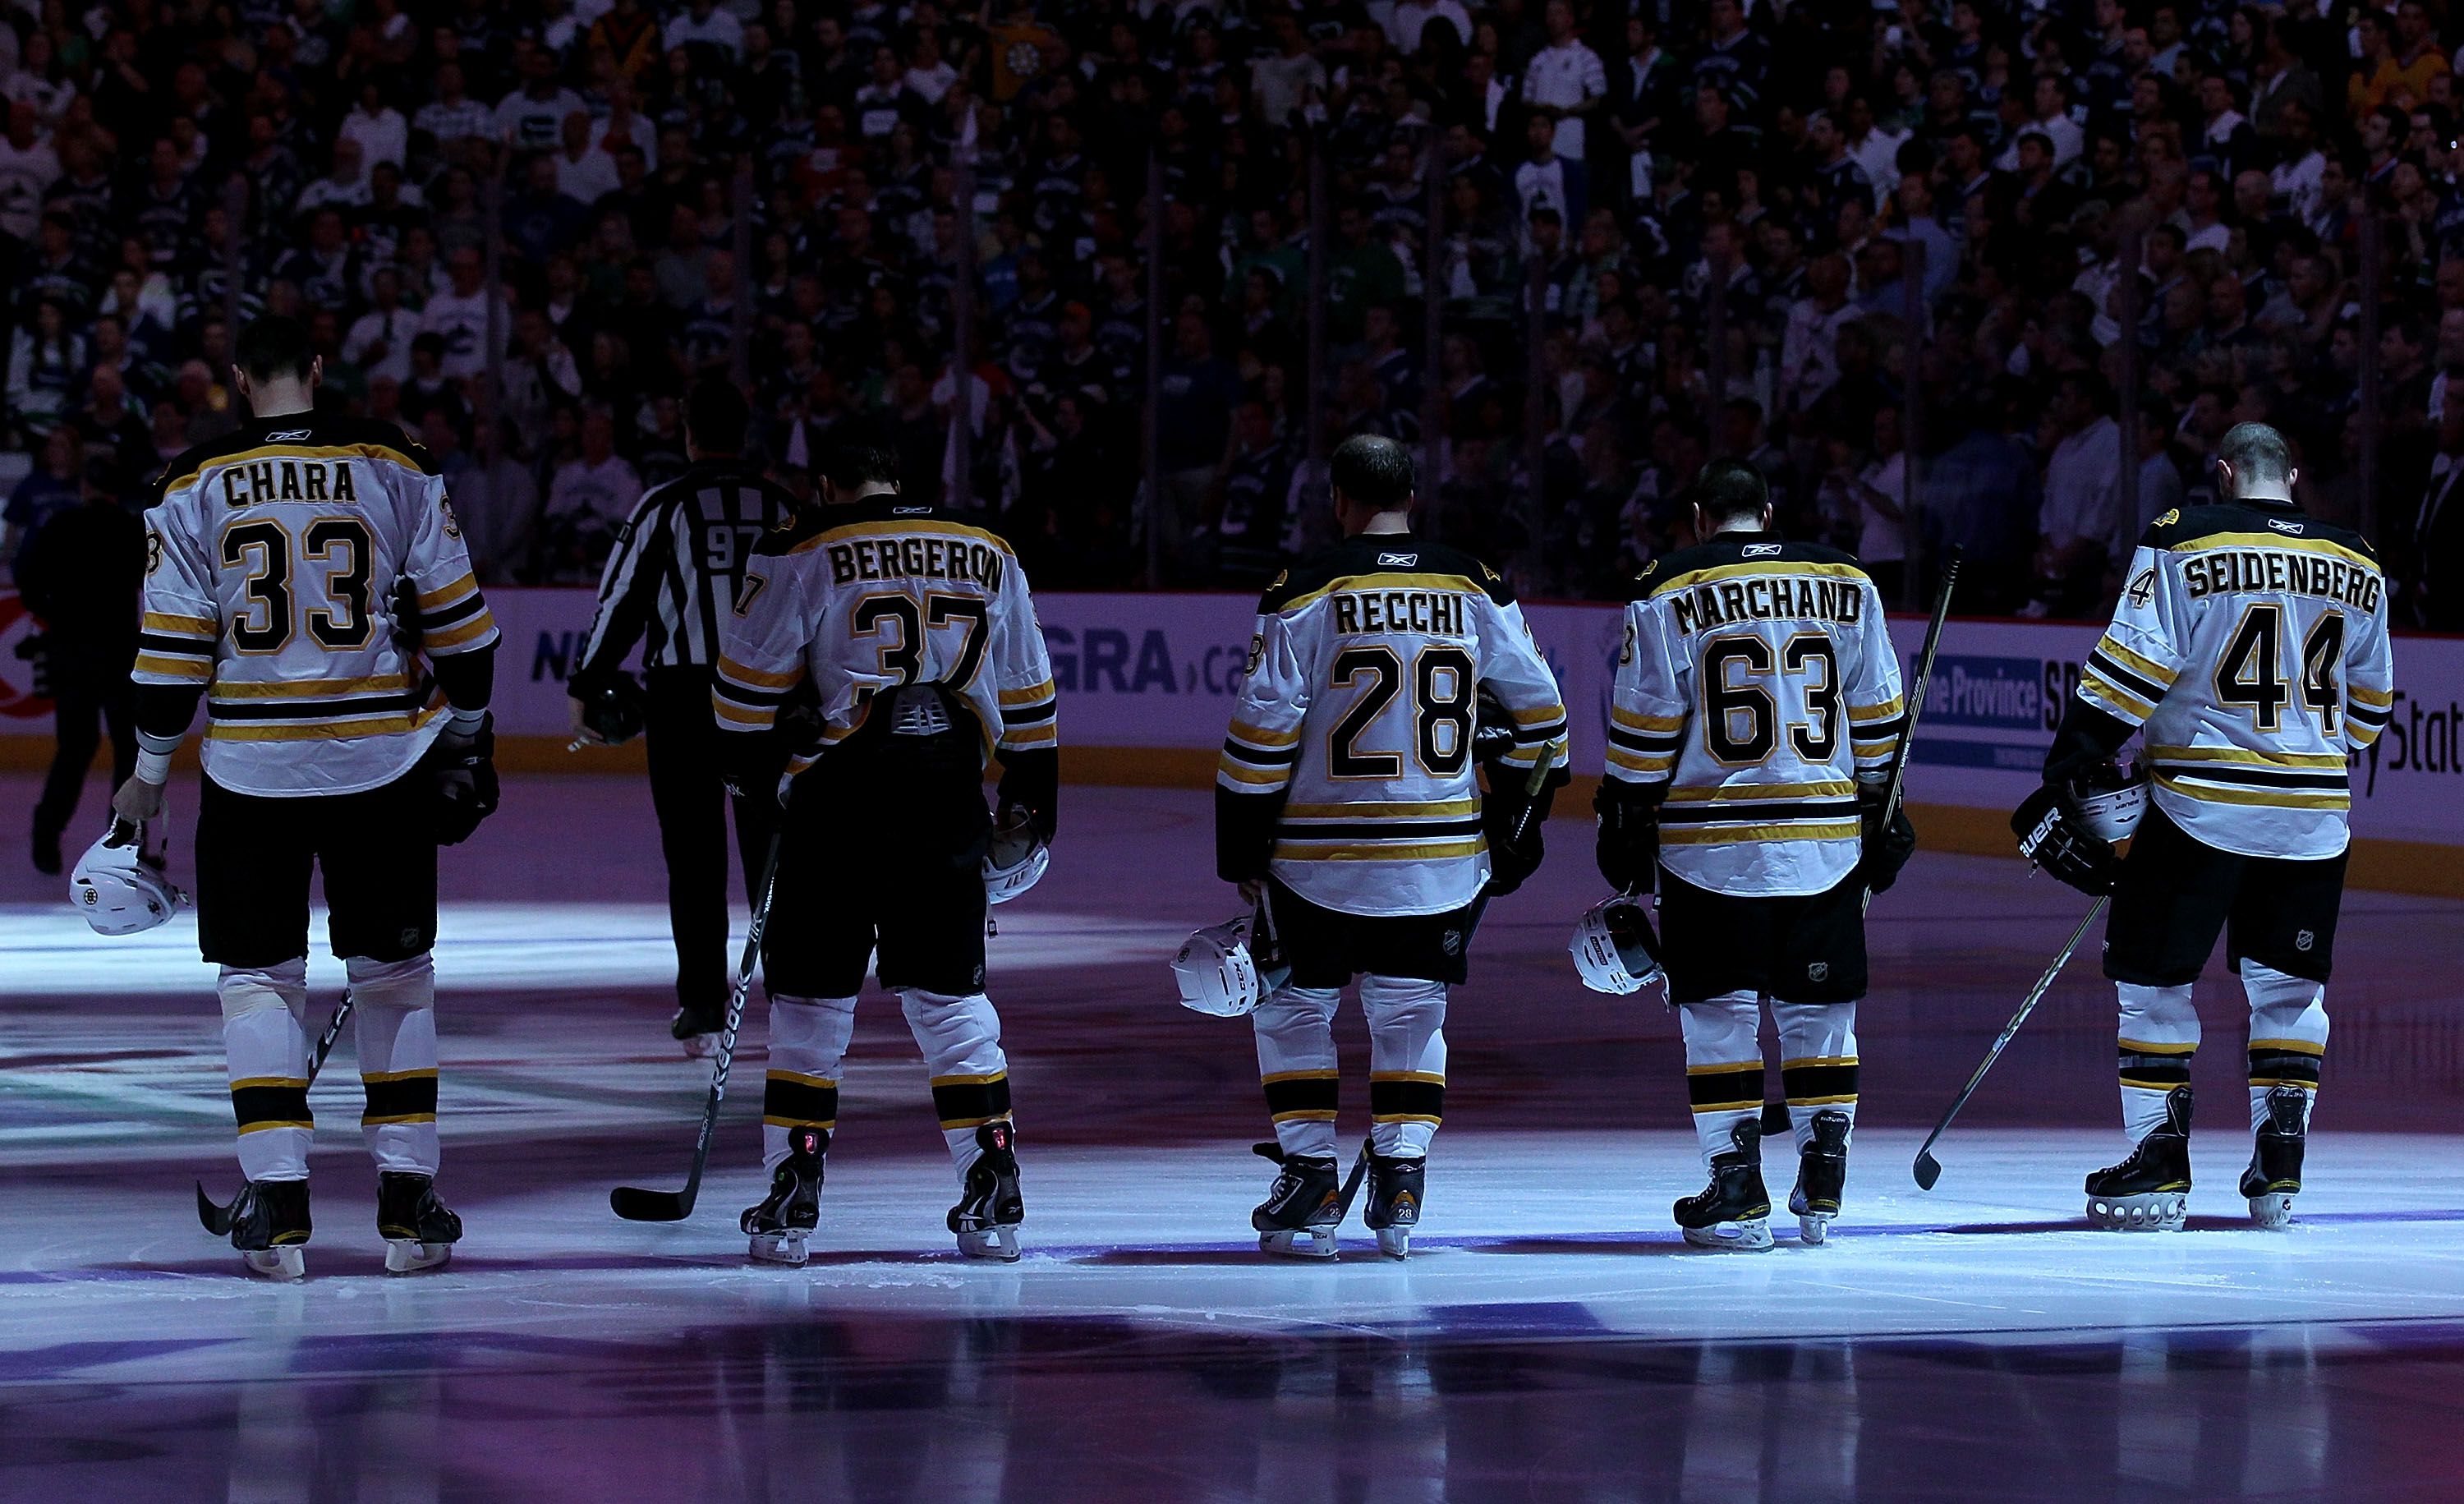 NHL All-Decade Team: 1980s Boston Bruins